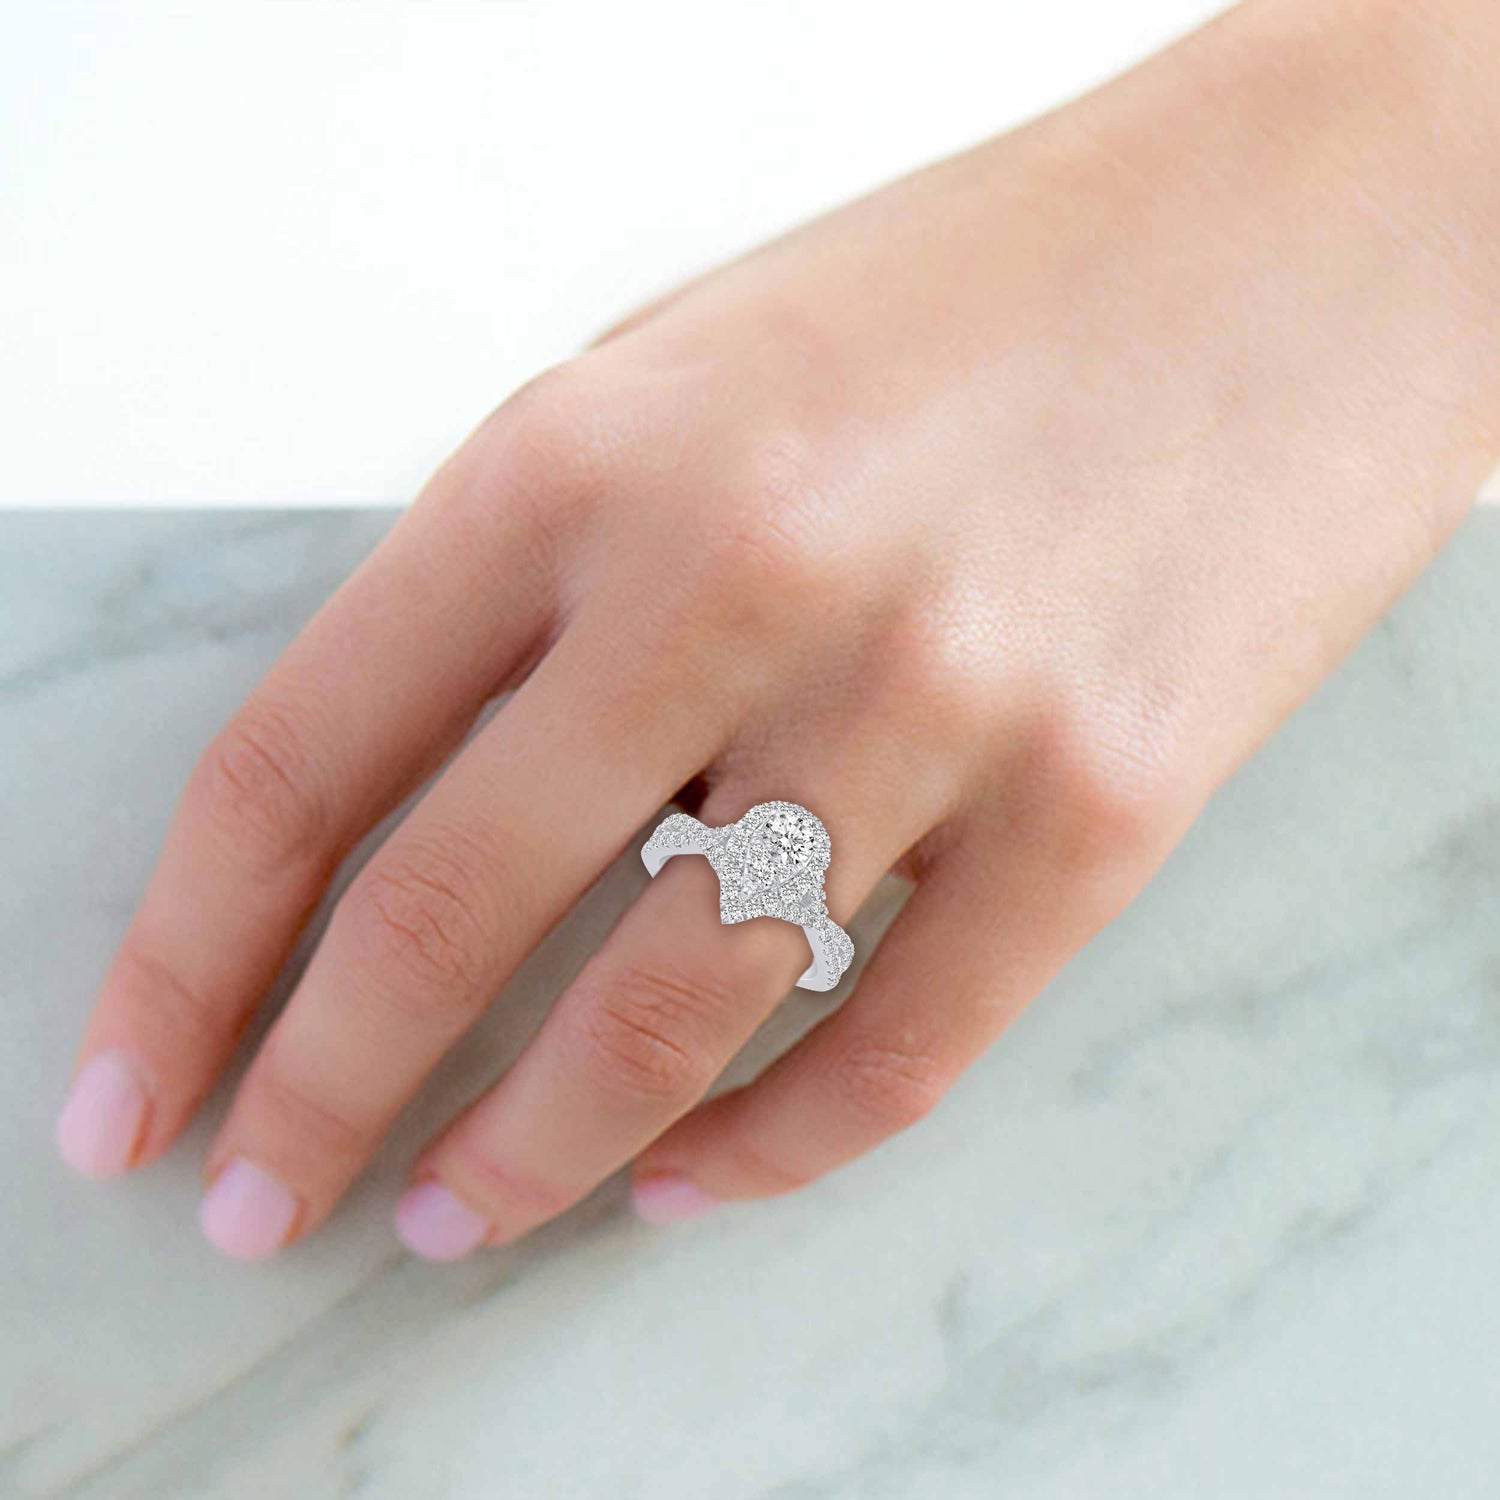 1 1/4 Cttw  (I1-I2 Clarity) Diamond Halo Pear Shape Engagement Wedding Bridal Ring in 14K Gold